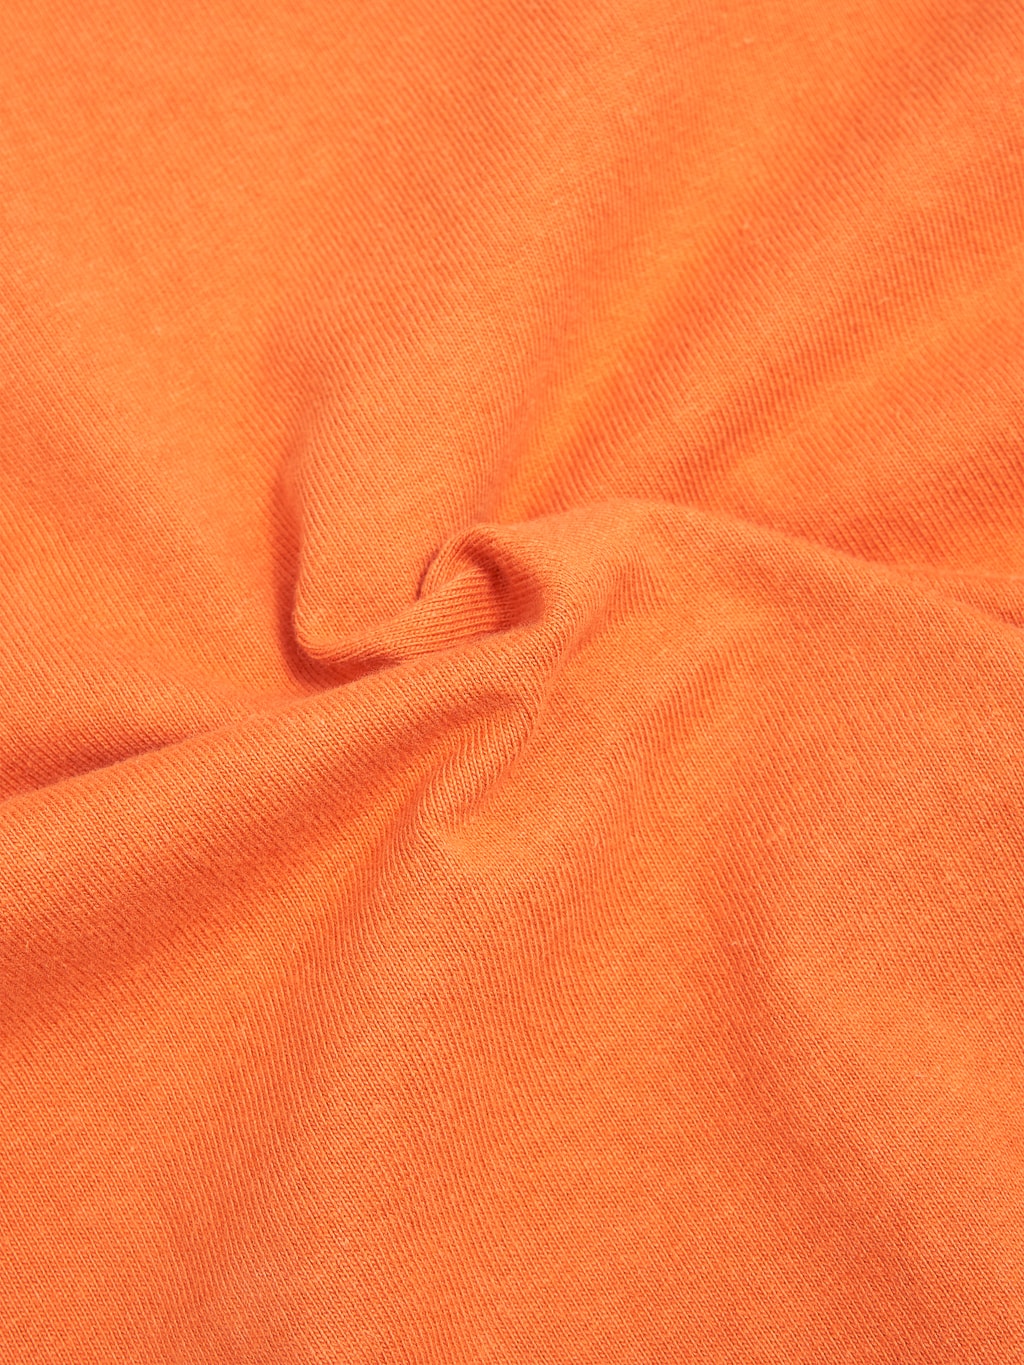 Samurai jeans solid plain heavyweight tshirt orange cotton fabric